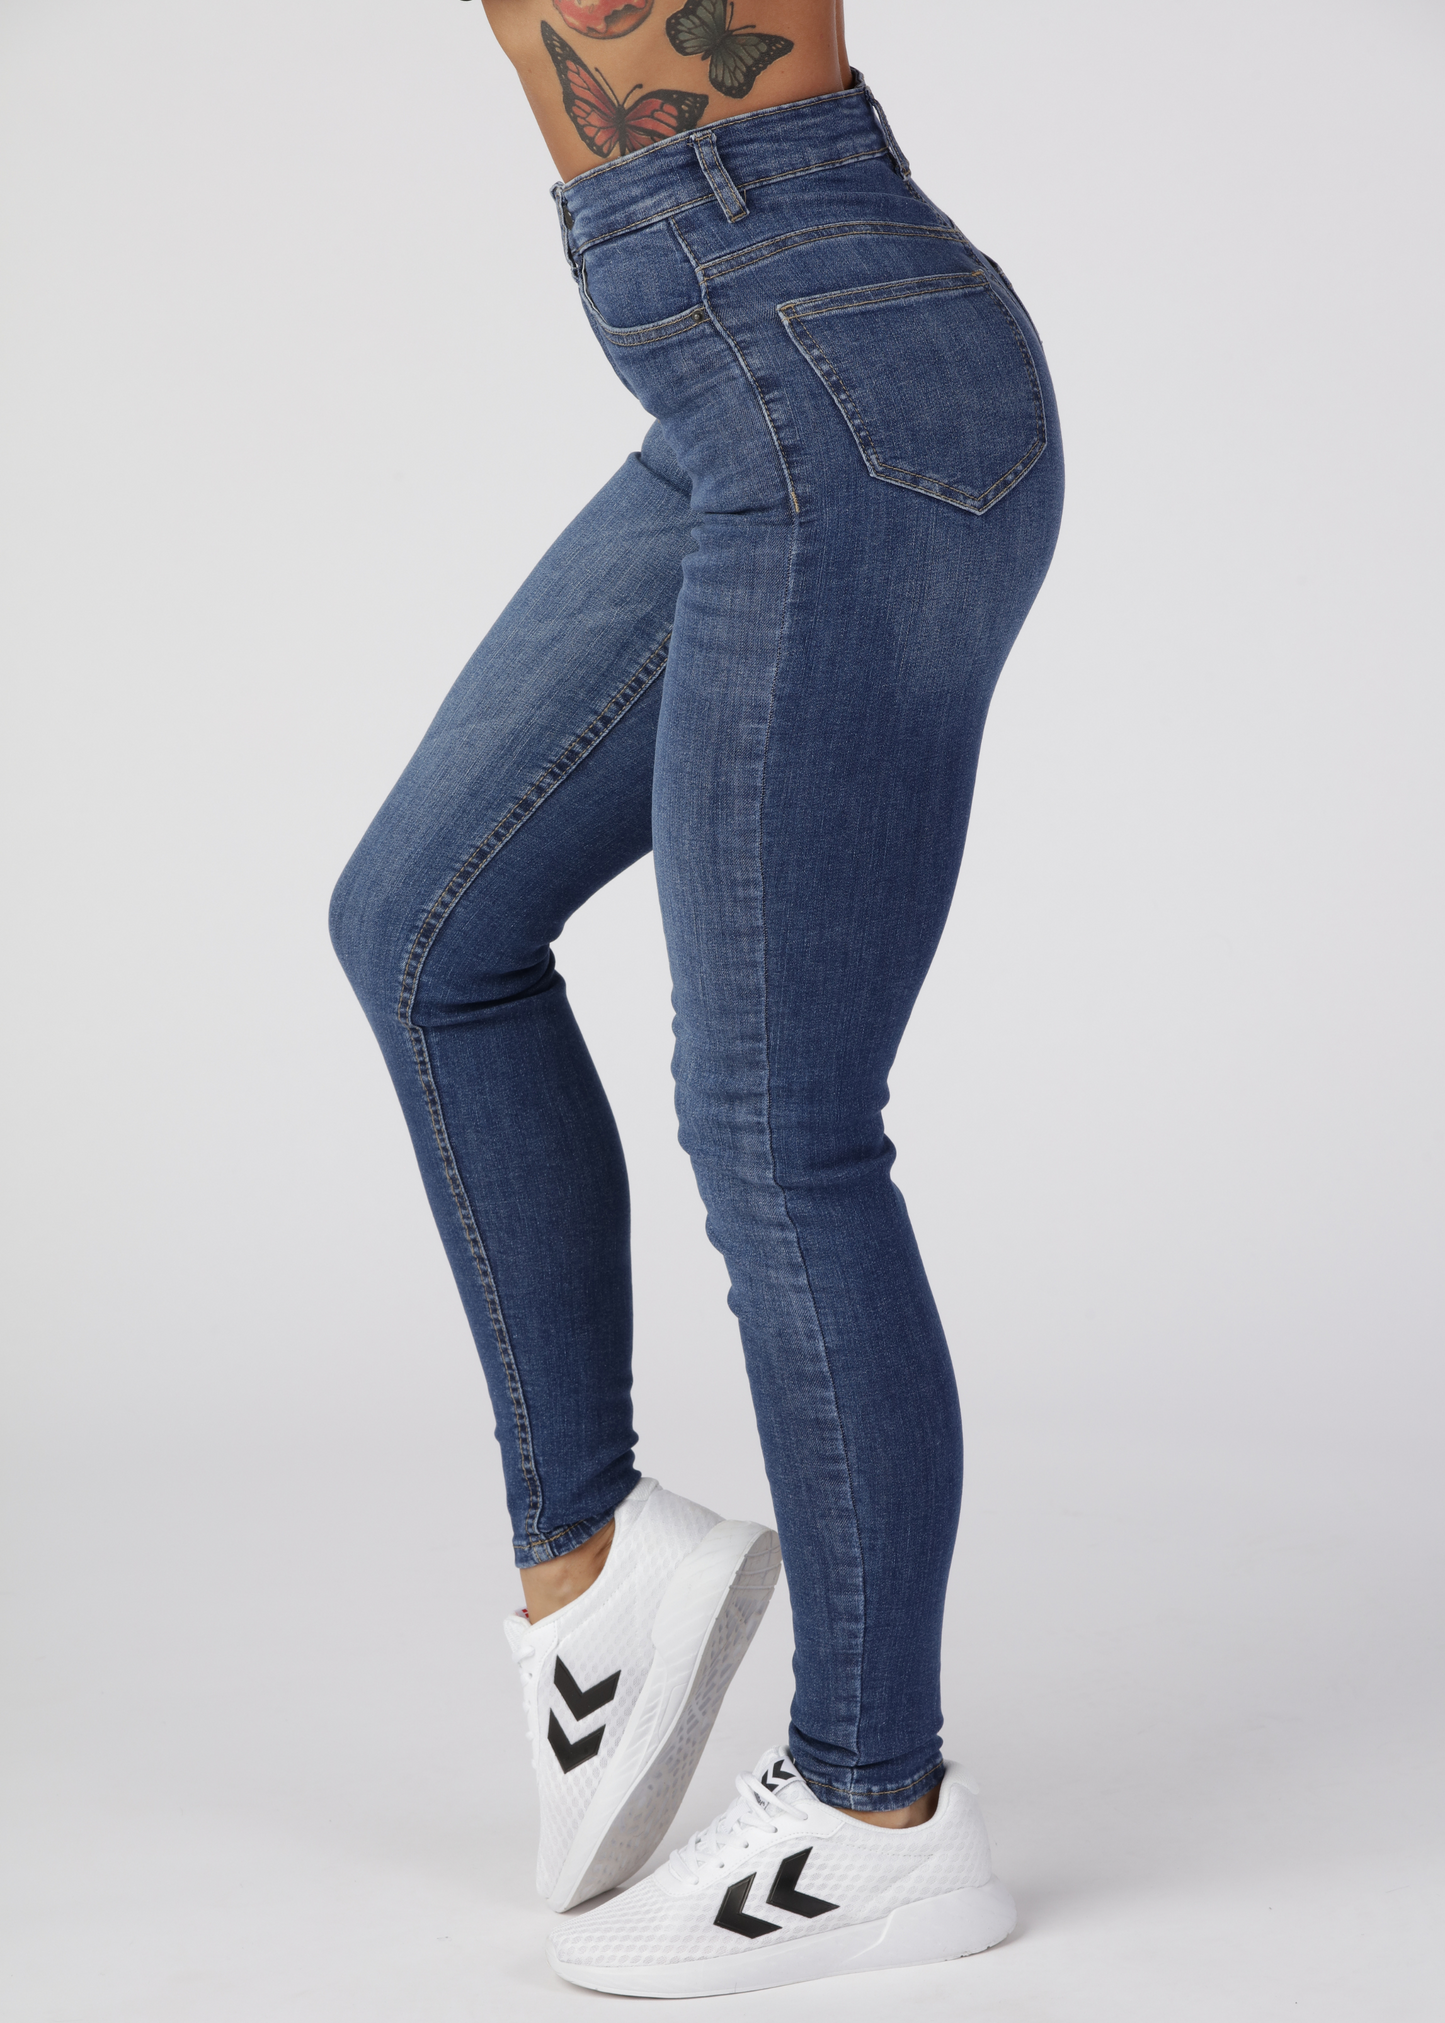 Satty Skinny Jeans - Blue Denim - for kvinde - NOISY MAY - Jeans